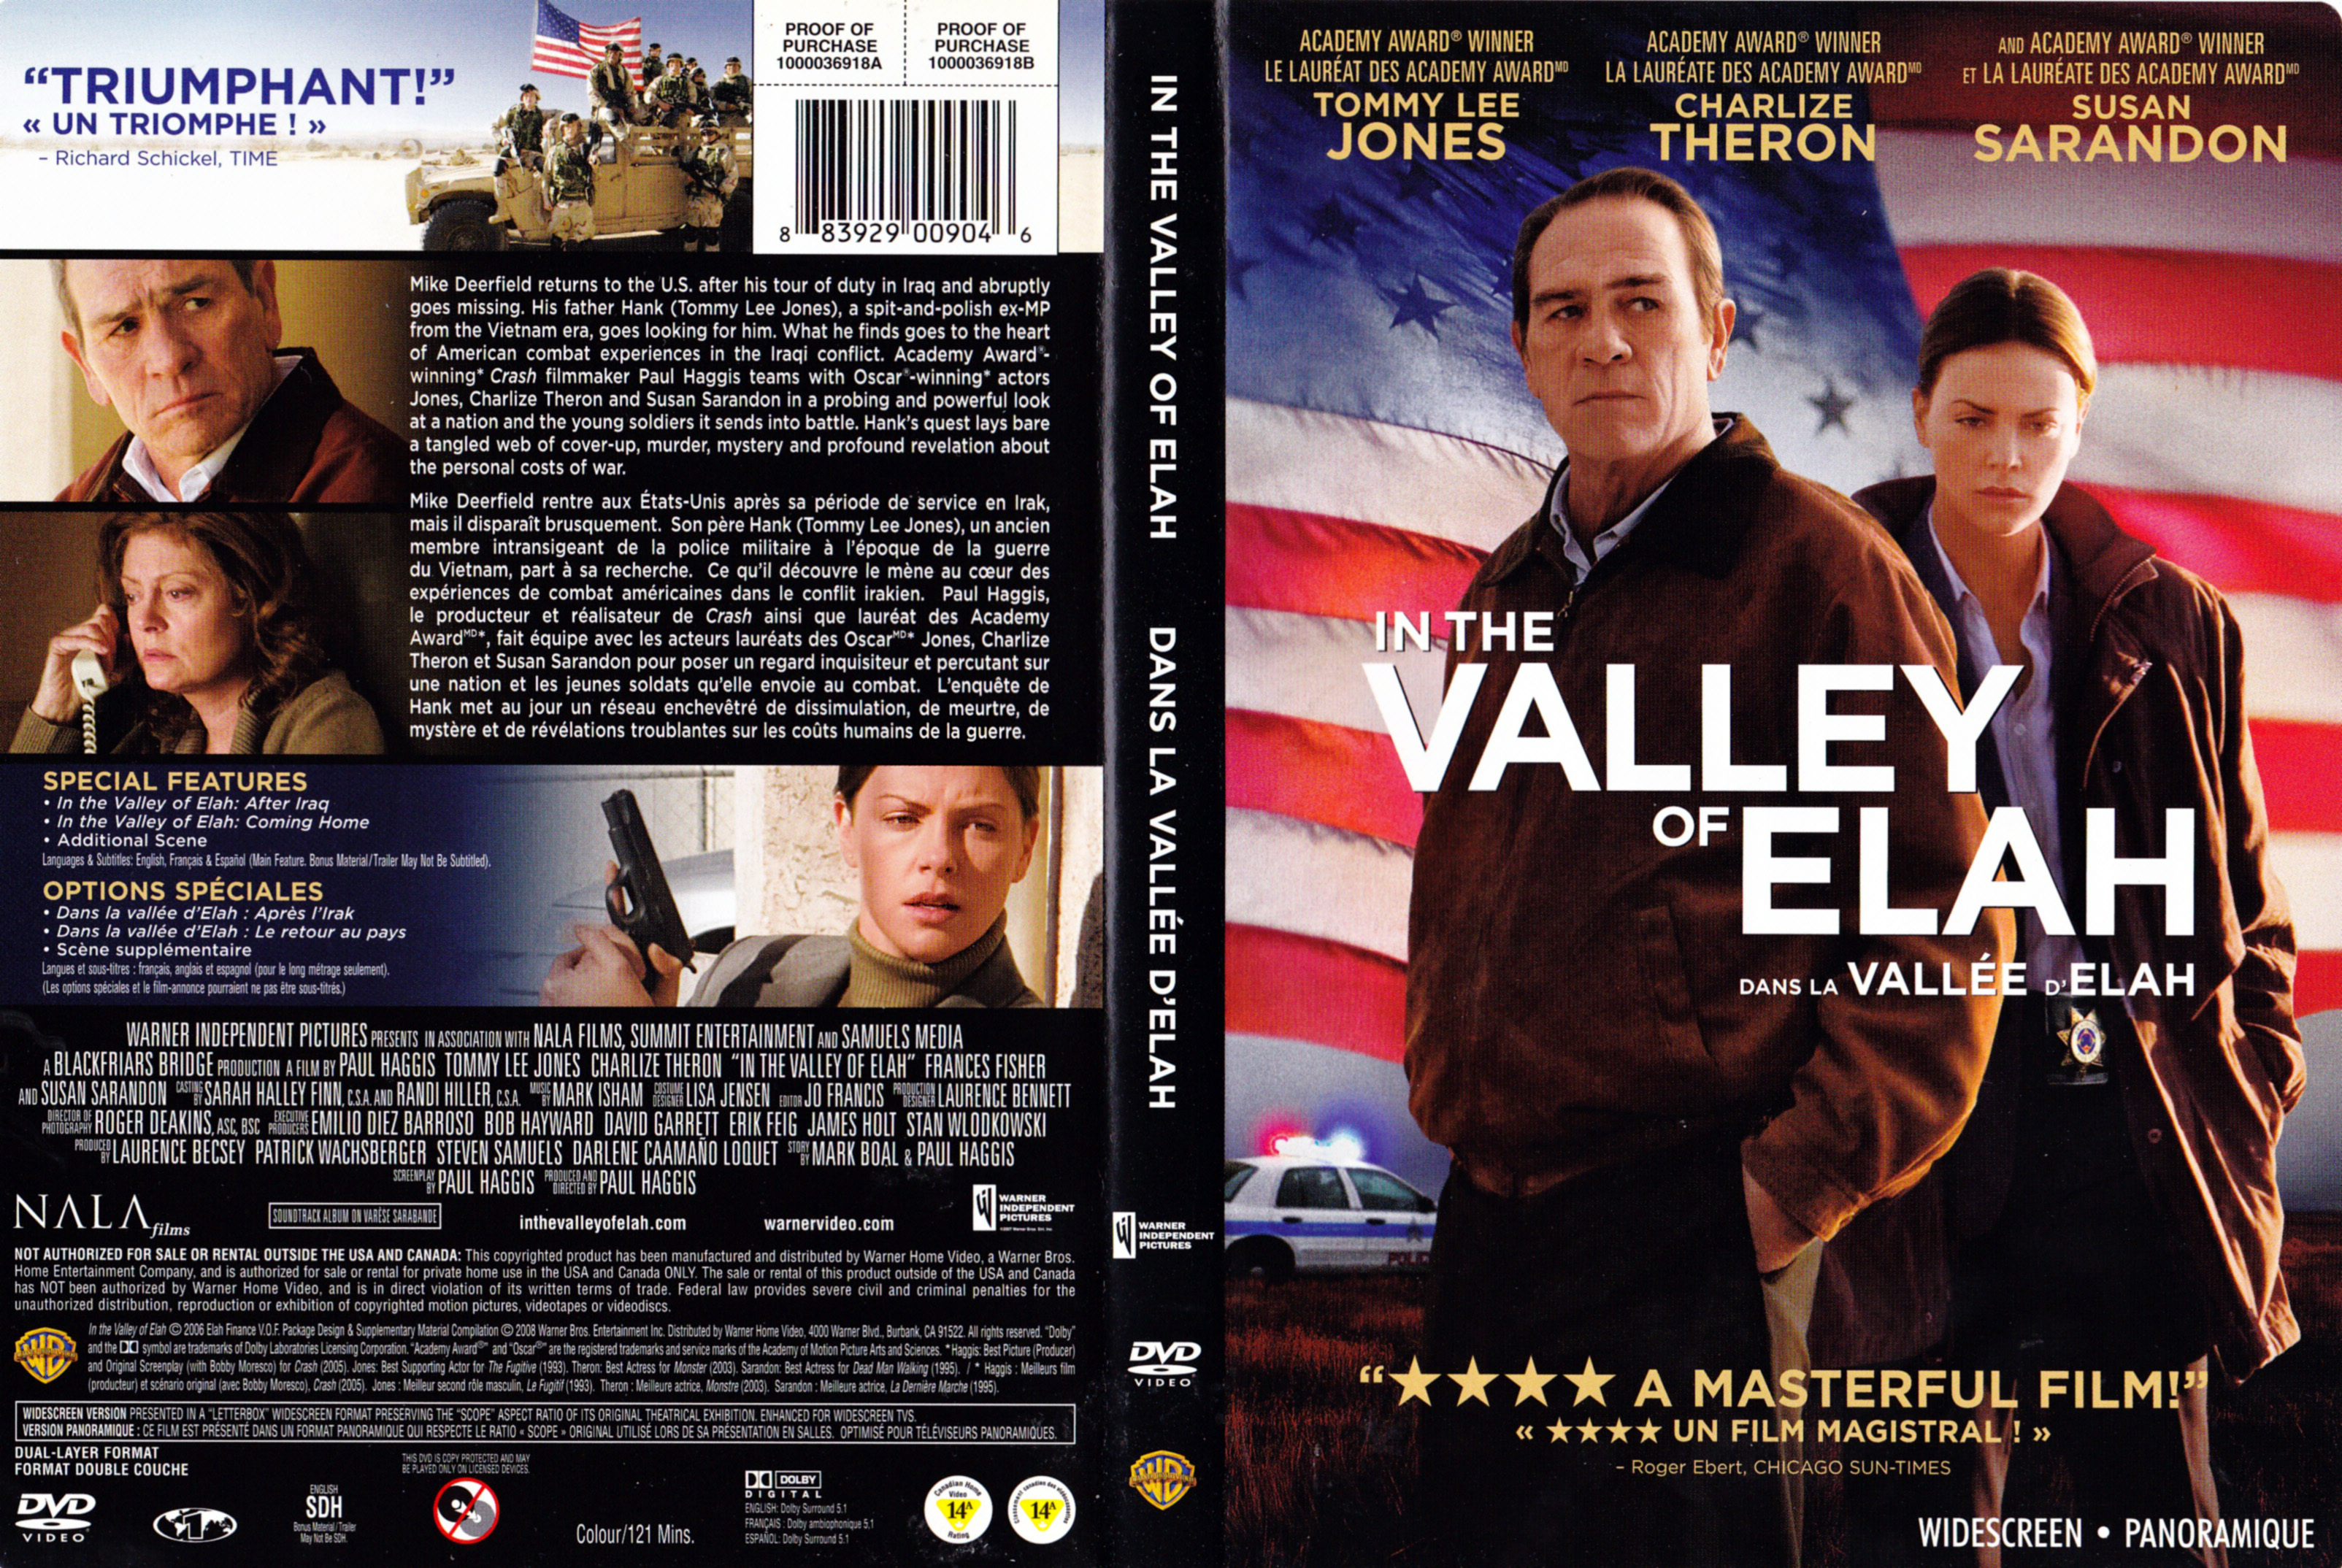 Jaquette DVD In the valley of Elah - Dans la valle d